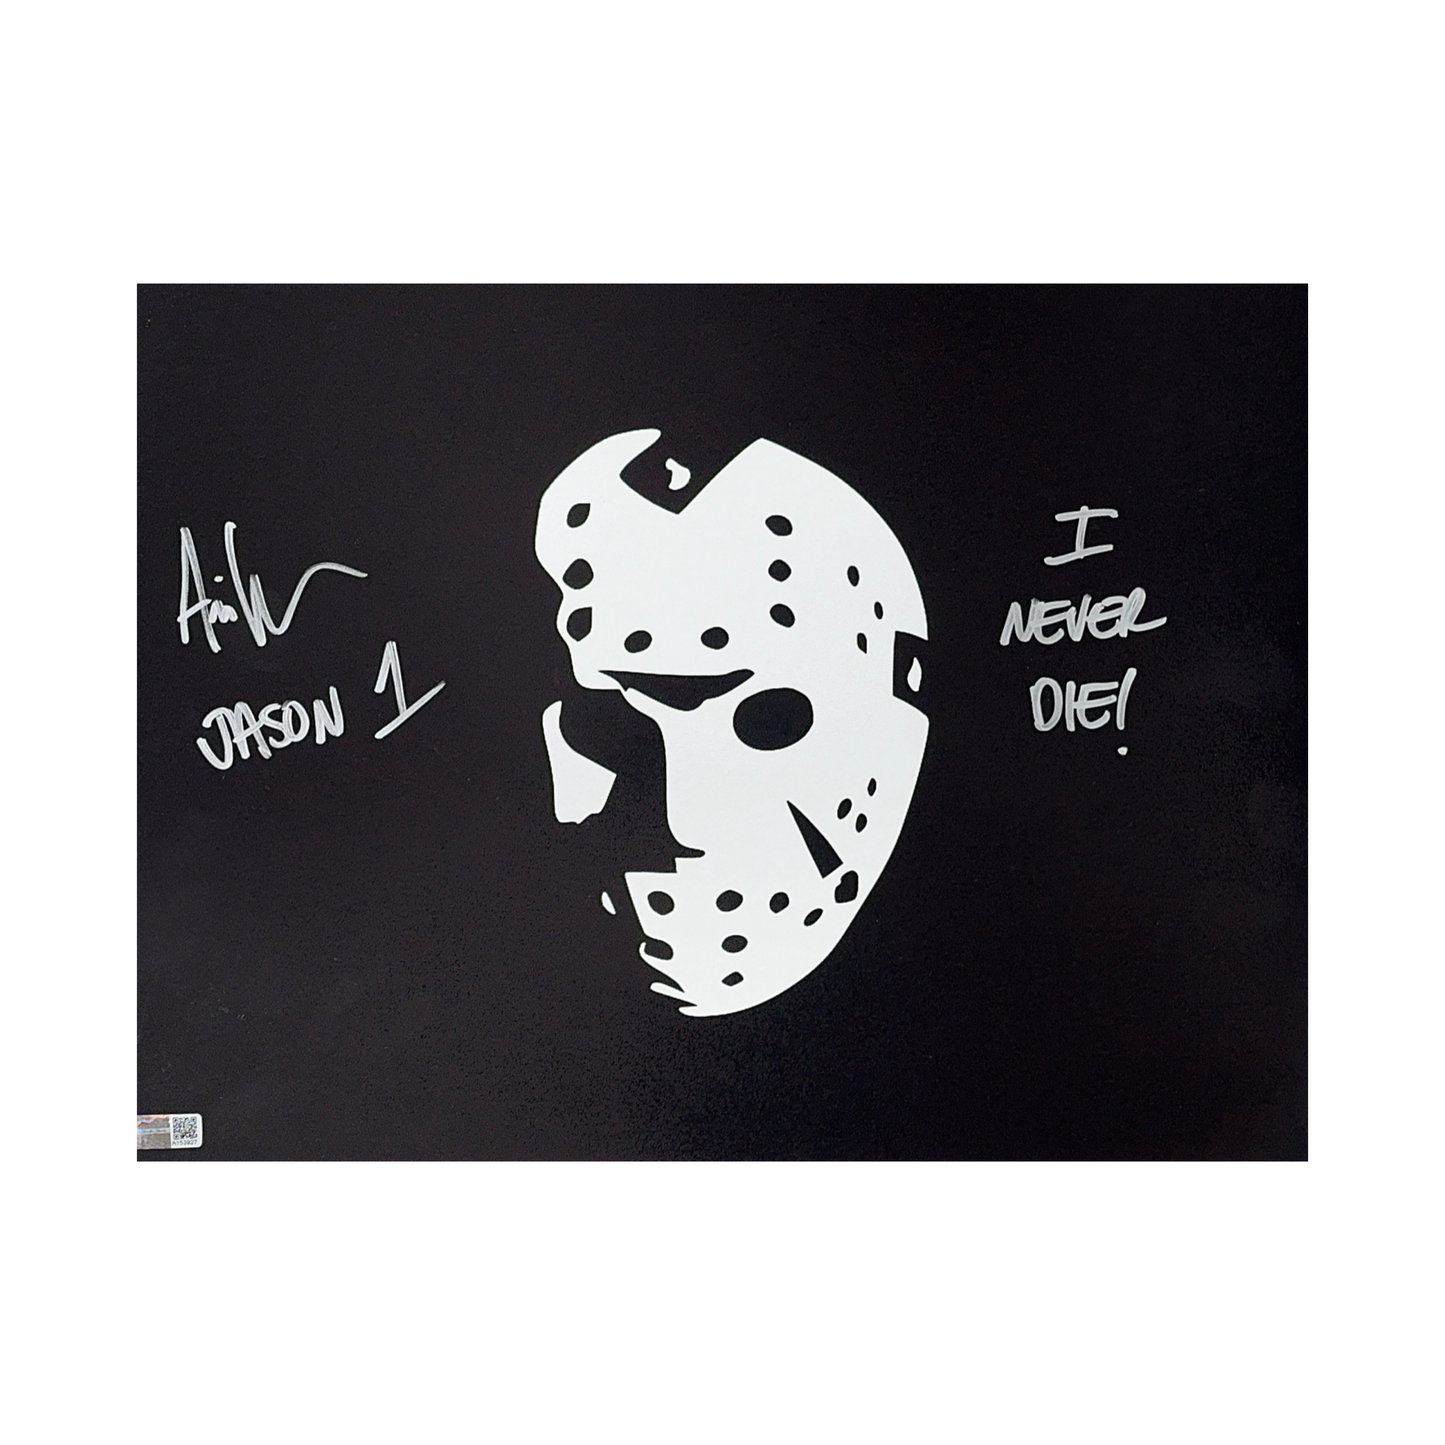 Ari Lehman Autographed Friday The 13th Jason Black Out 11x14 "I Never Die! Jason 1" Inscription Steiner CX